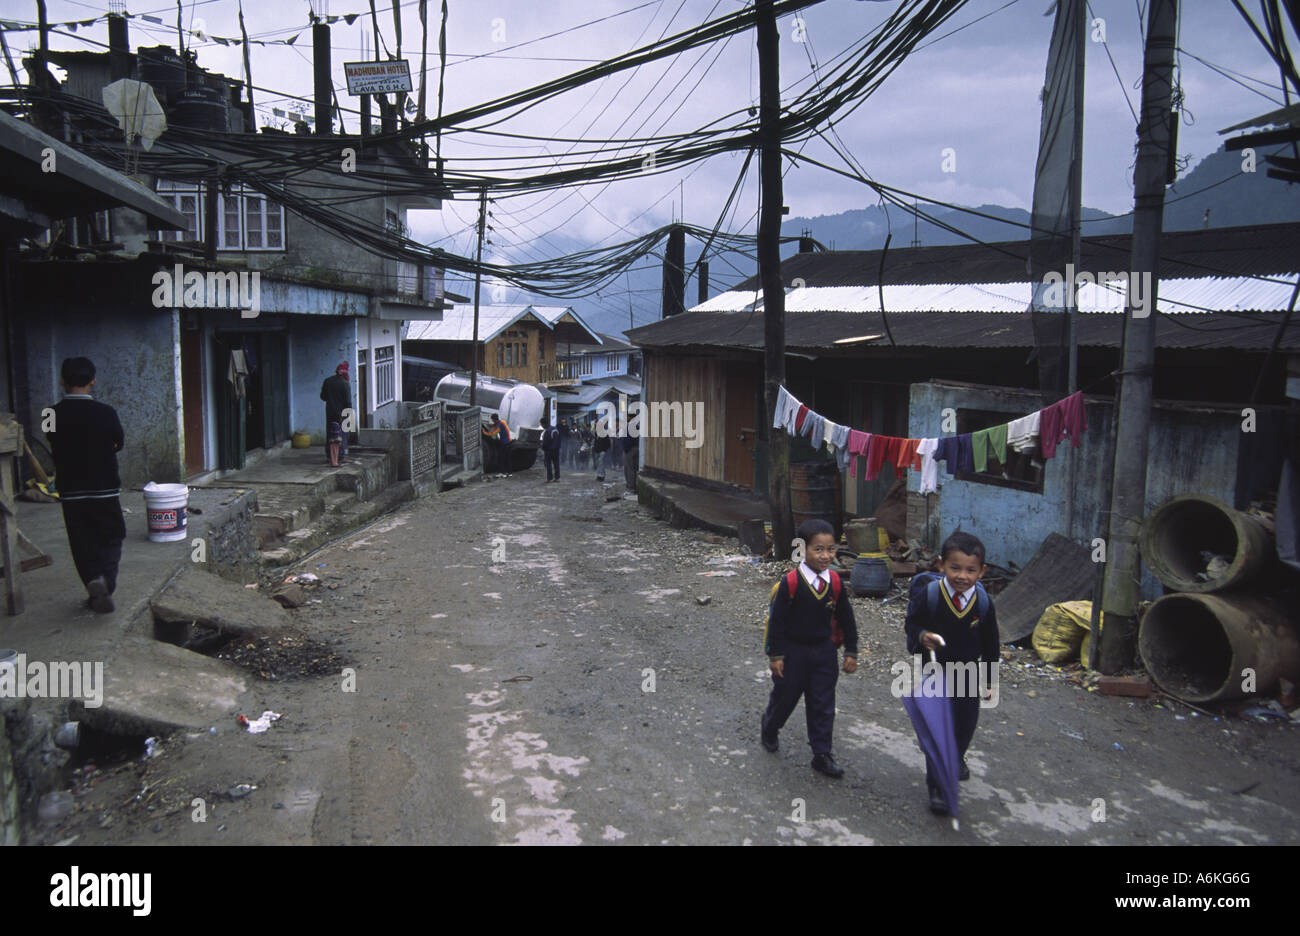 Two schoolchildren go to school in the town of Lava, Darjeeling District, India Stock Photo